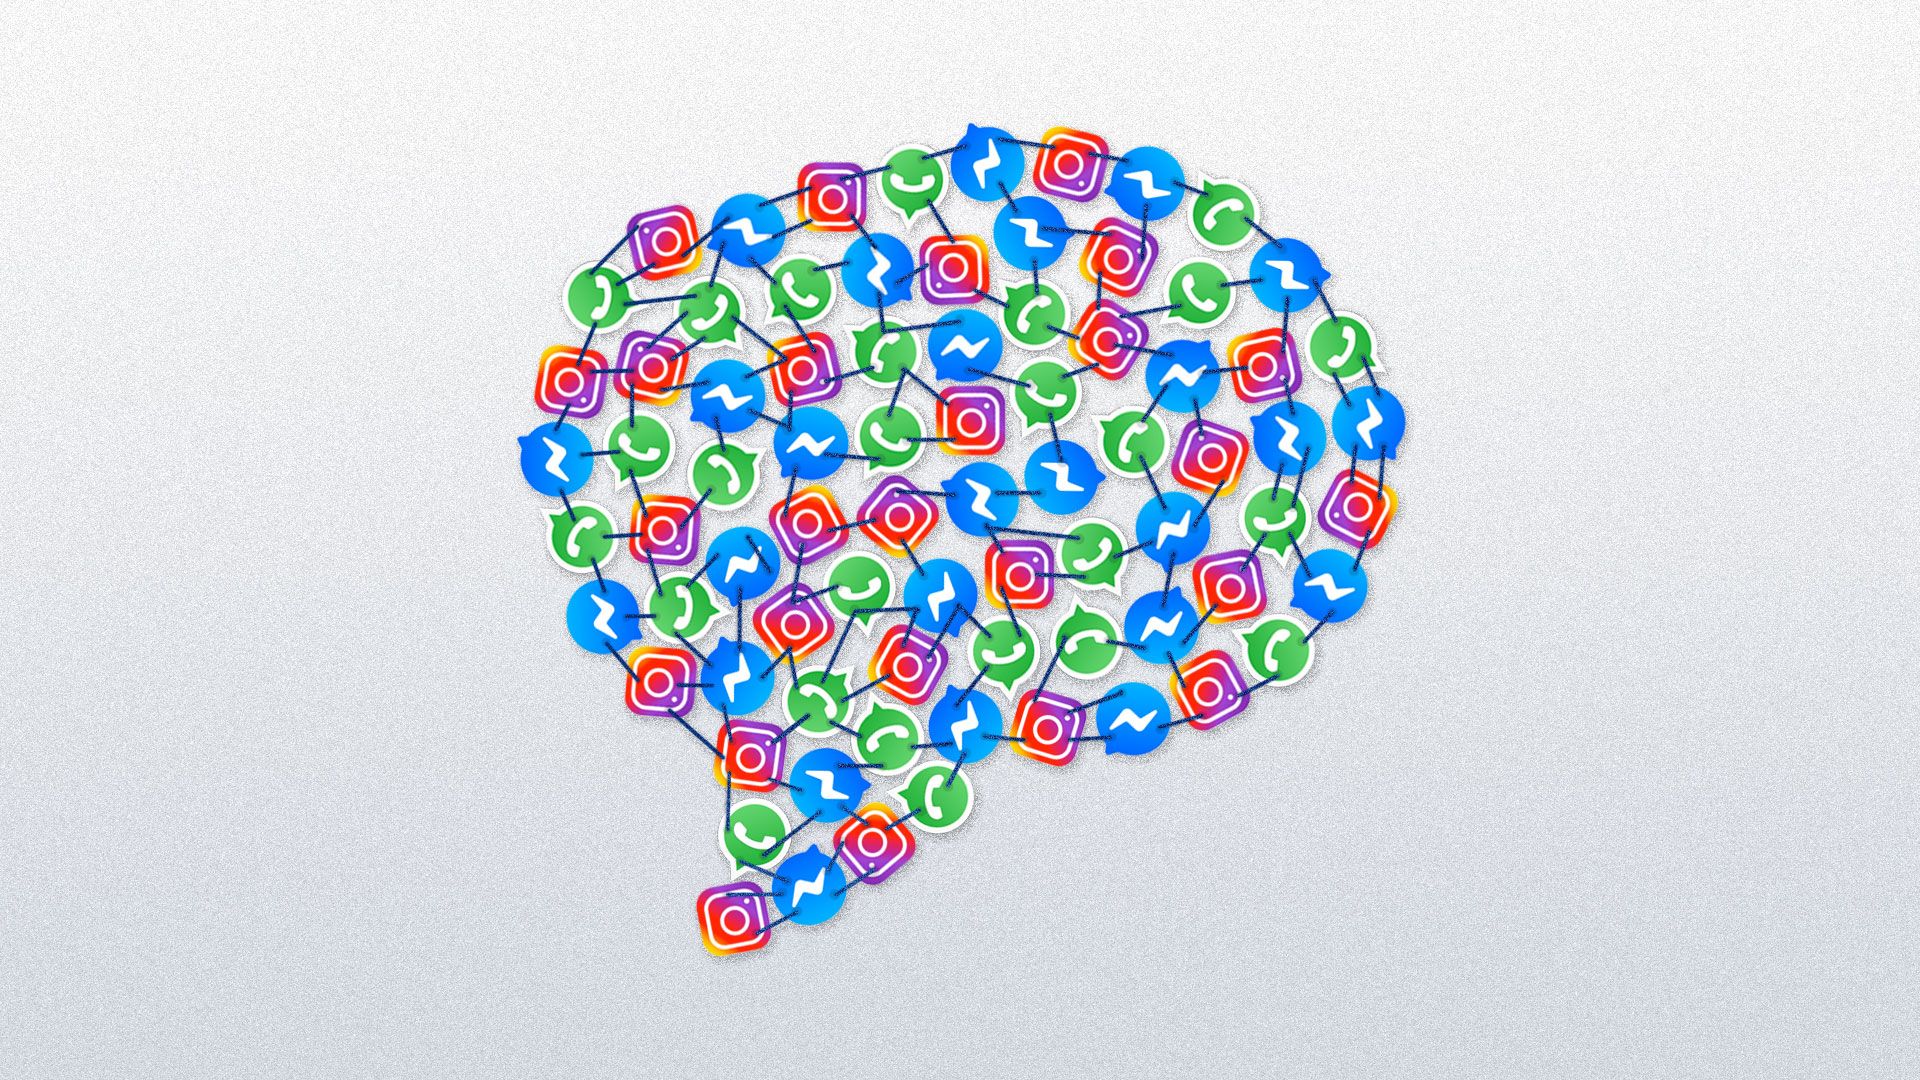 A speech bubble made out of WhatsApp, Facebook Messenger and Instagram logos.